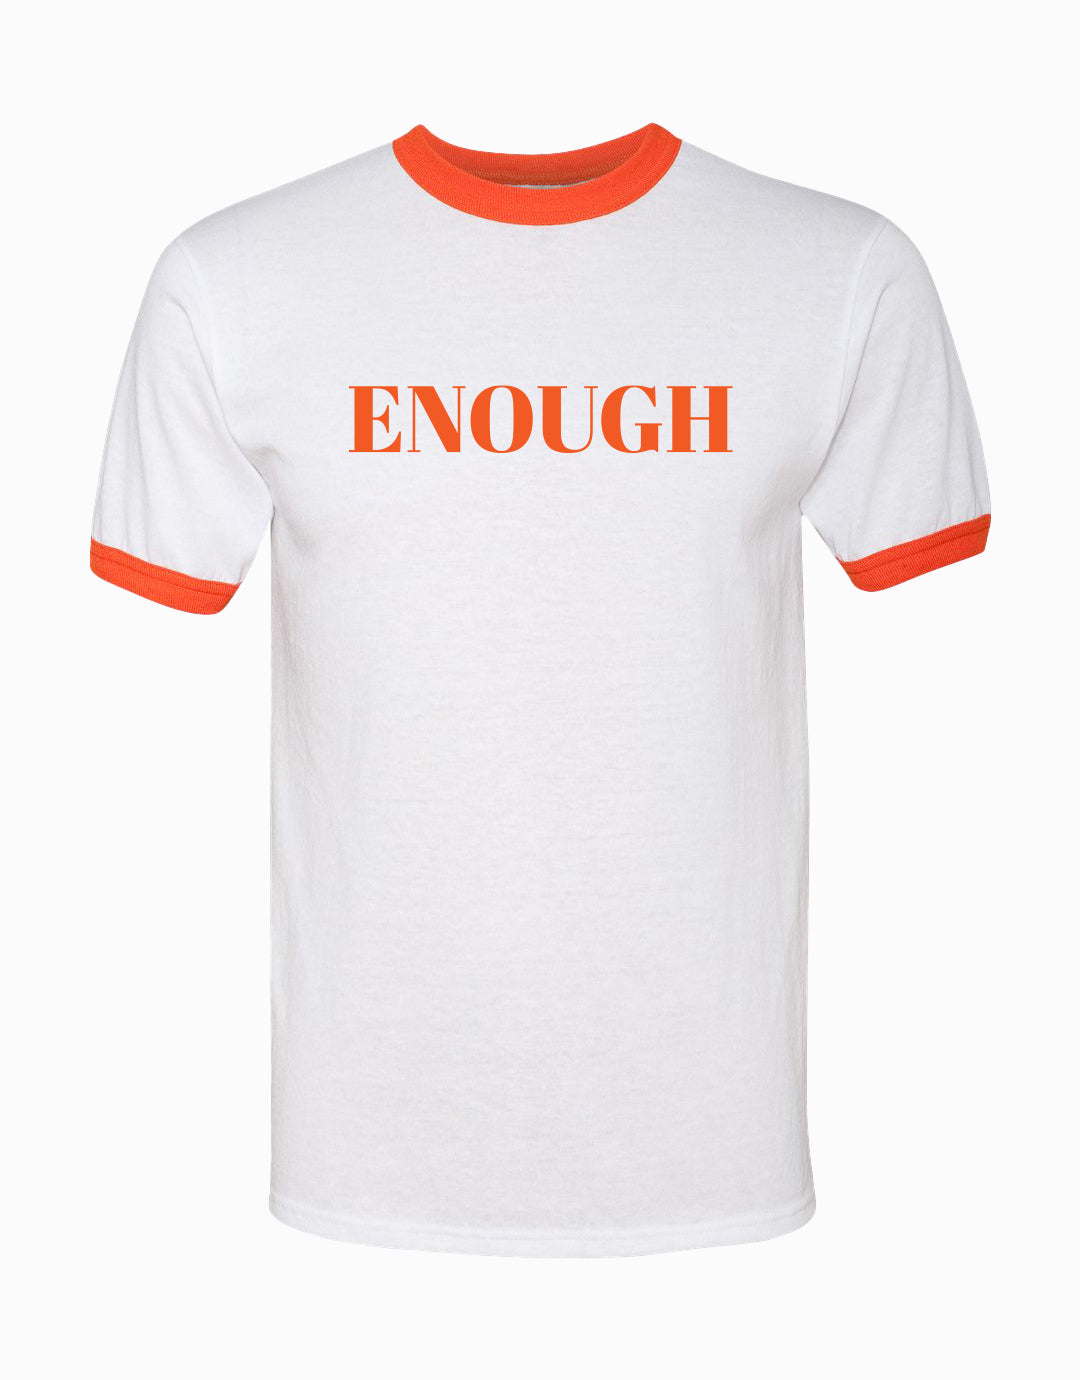 Enough Ringer T-Shirt